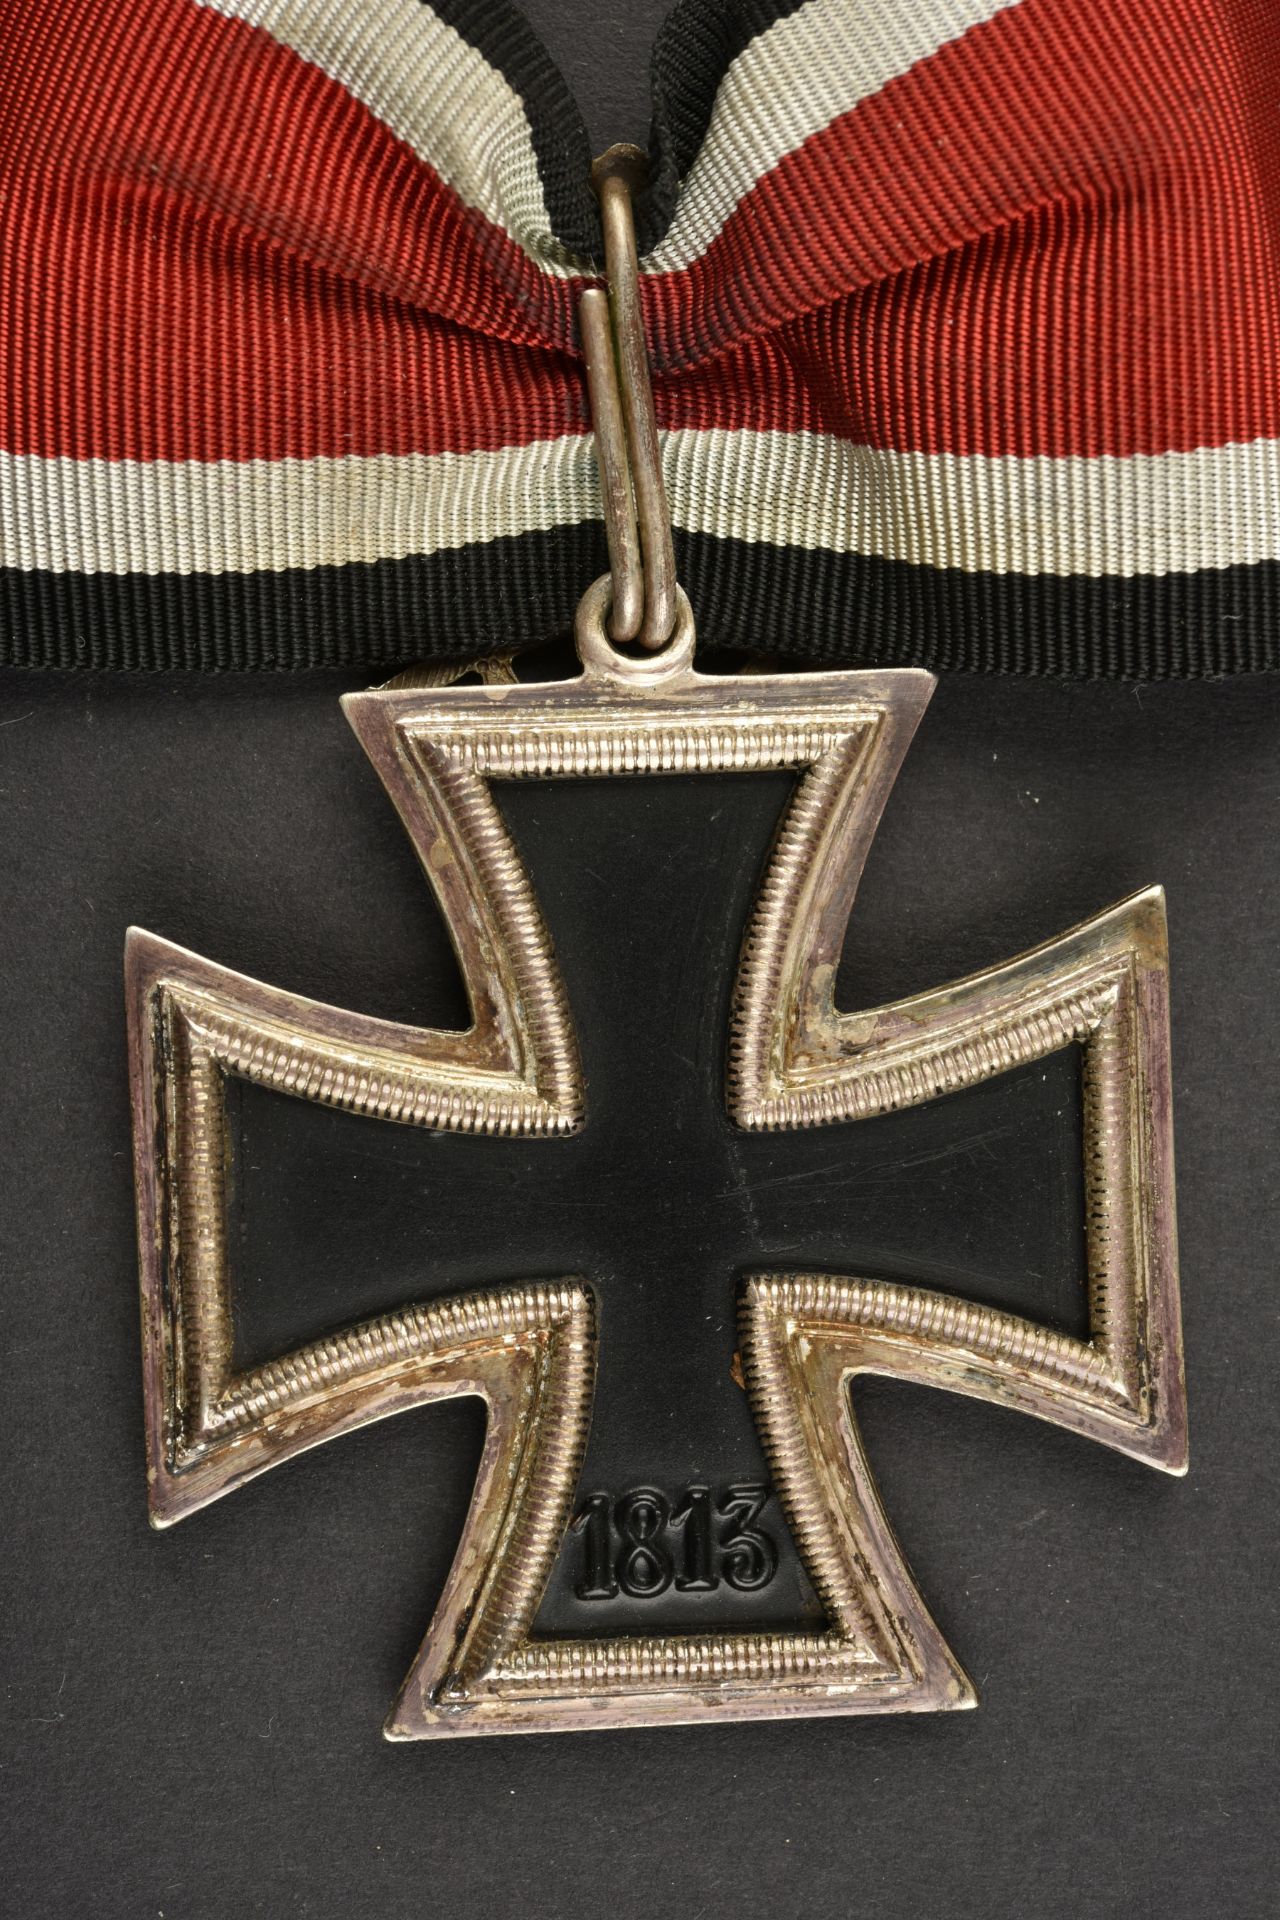 Reproduction de Croix de Chevalier. Reproduction of a Knight s Cross. - Image 5 of 17